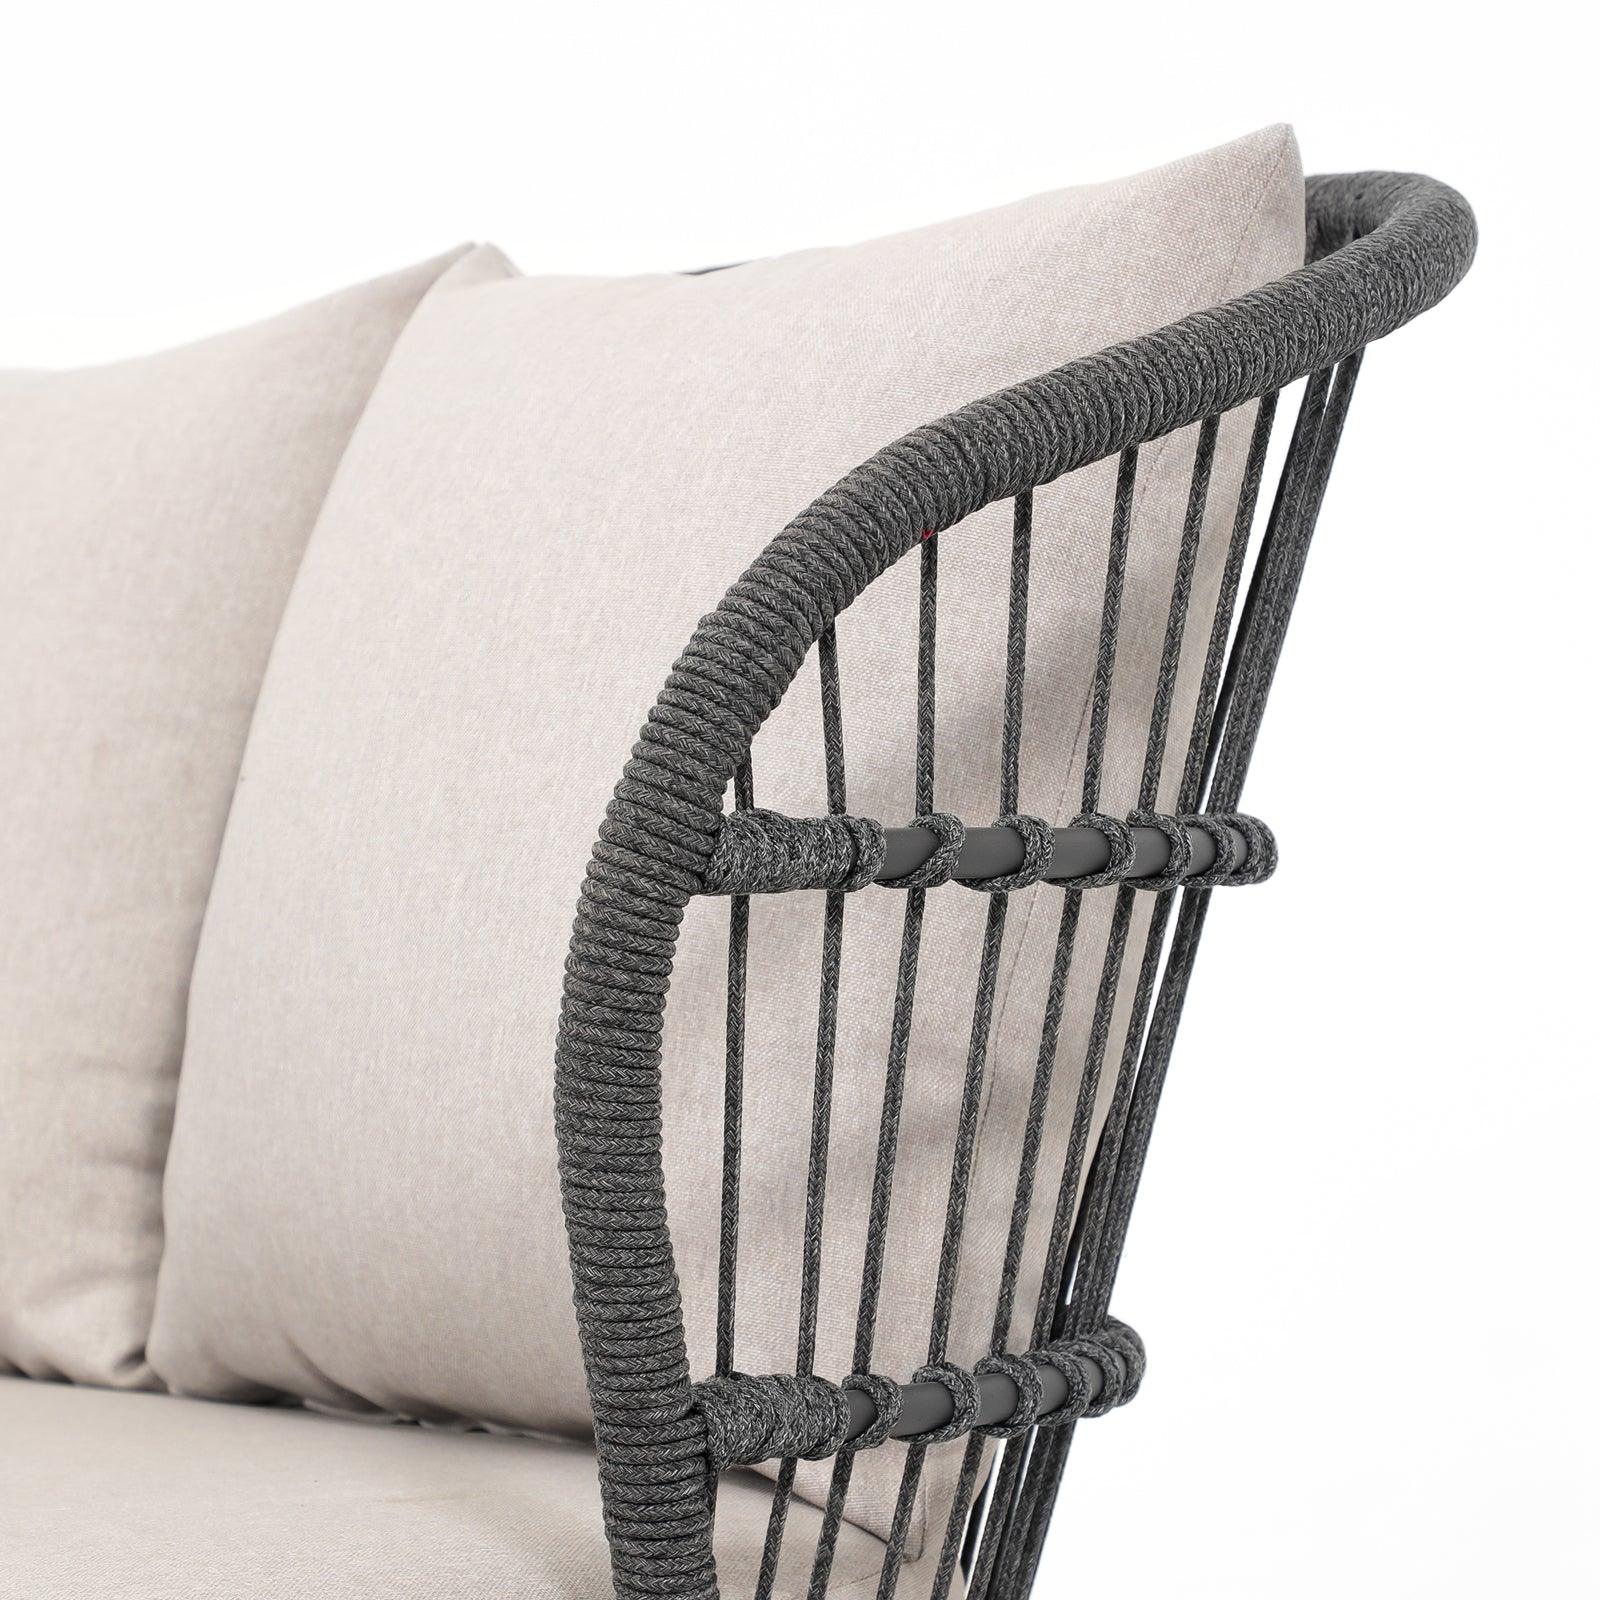 Comino dark grey chair rope and light grey cushion details, armrest details- Jardina Furniture